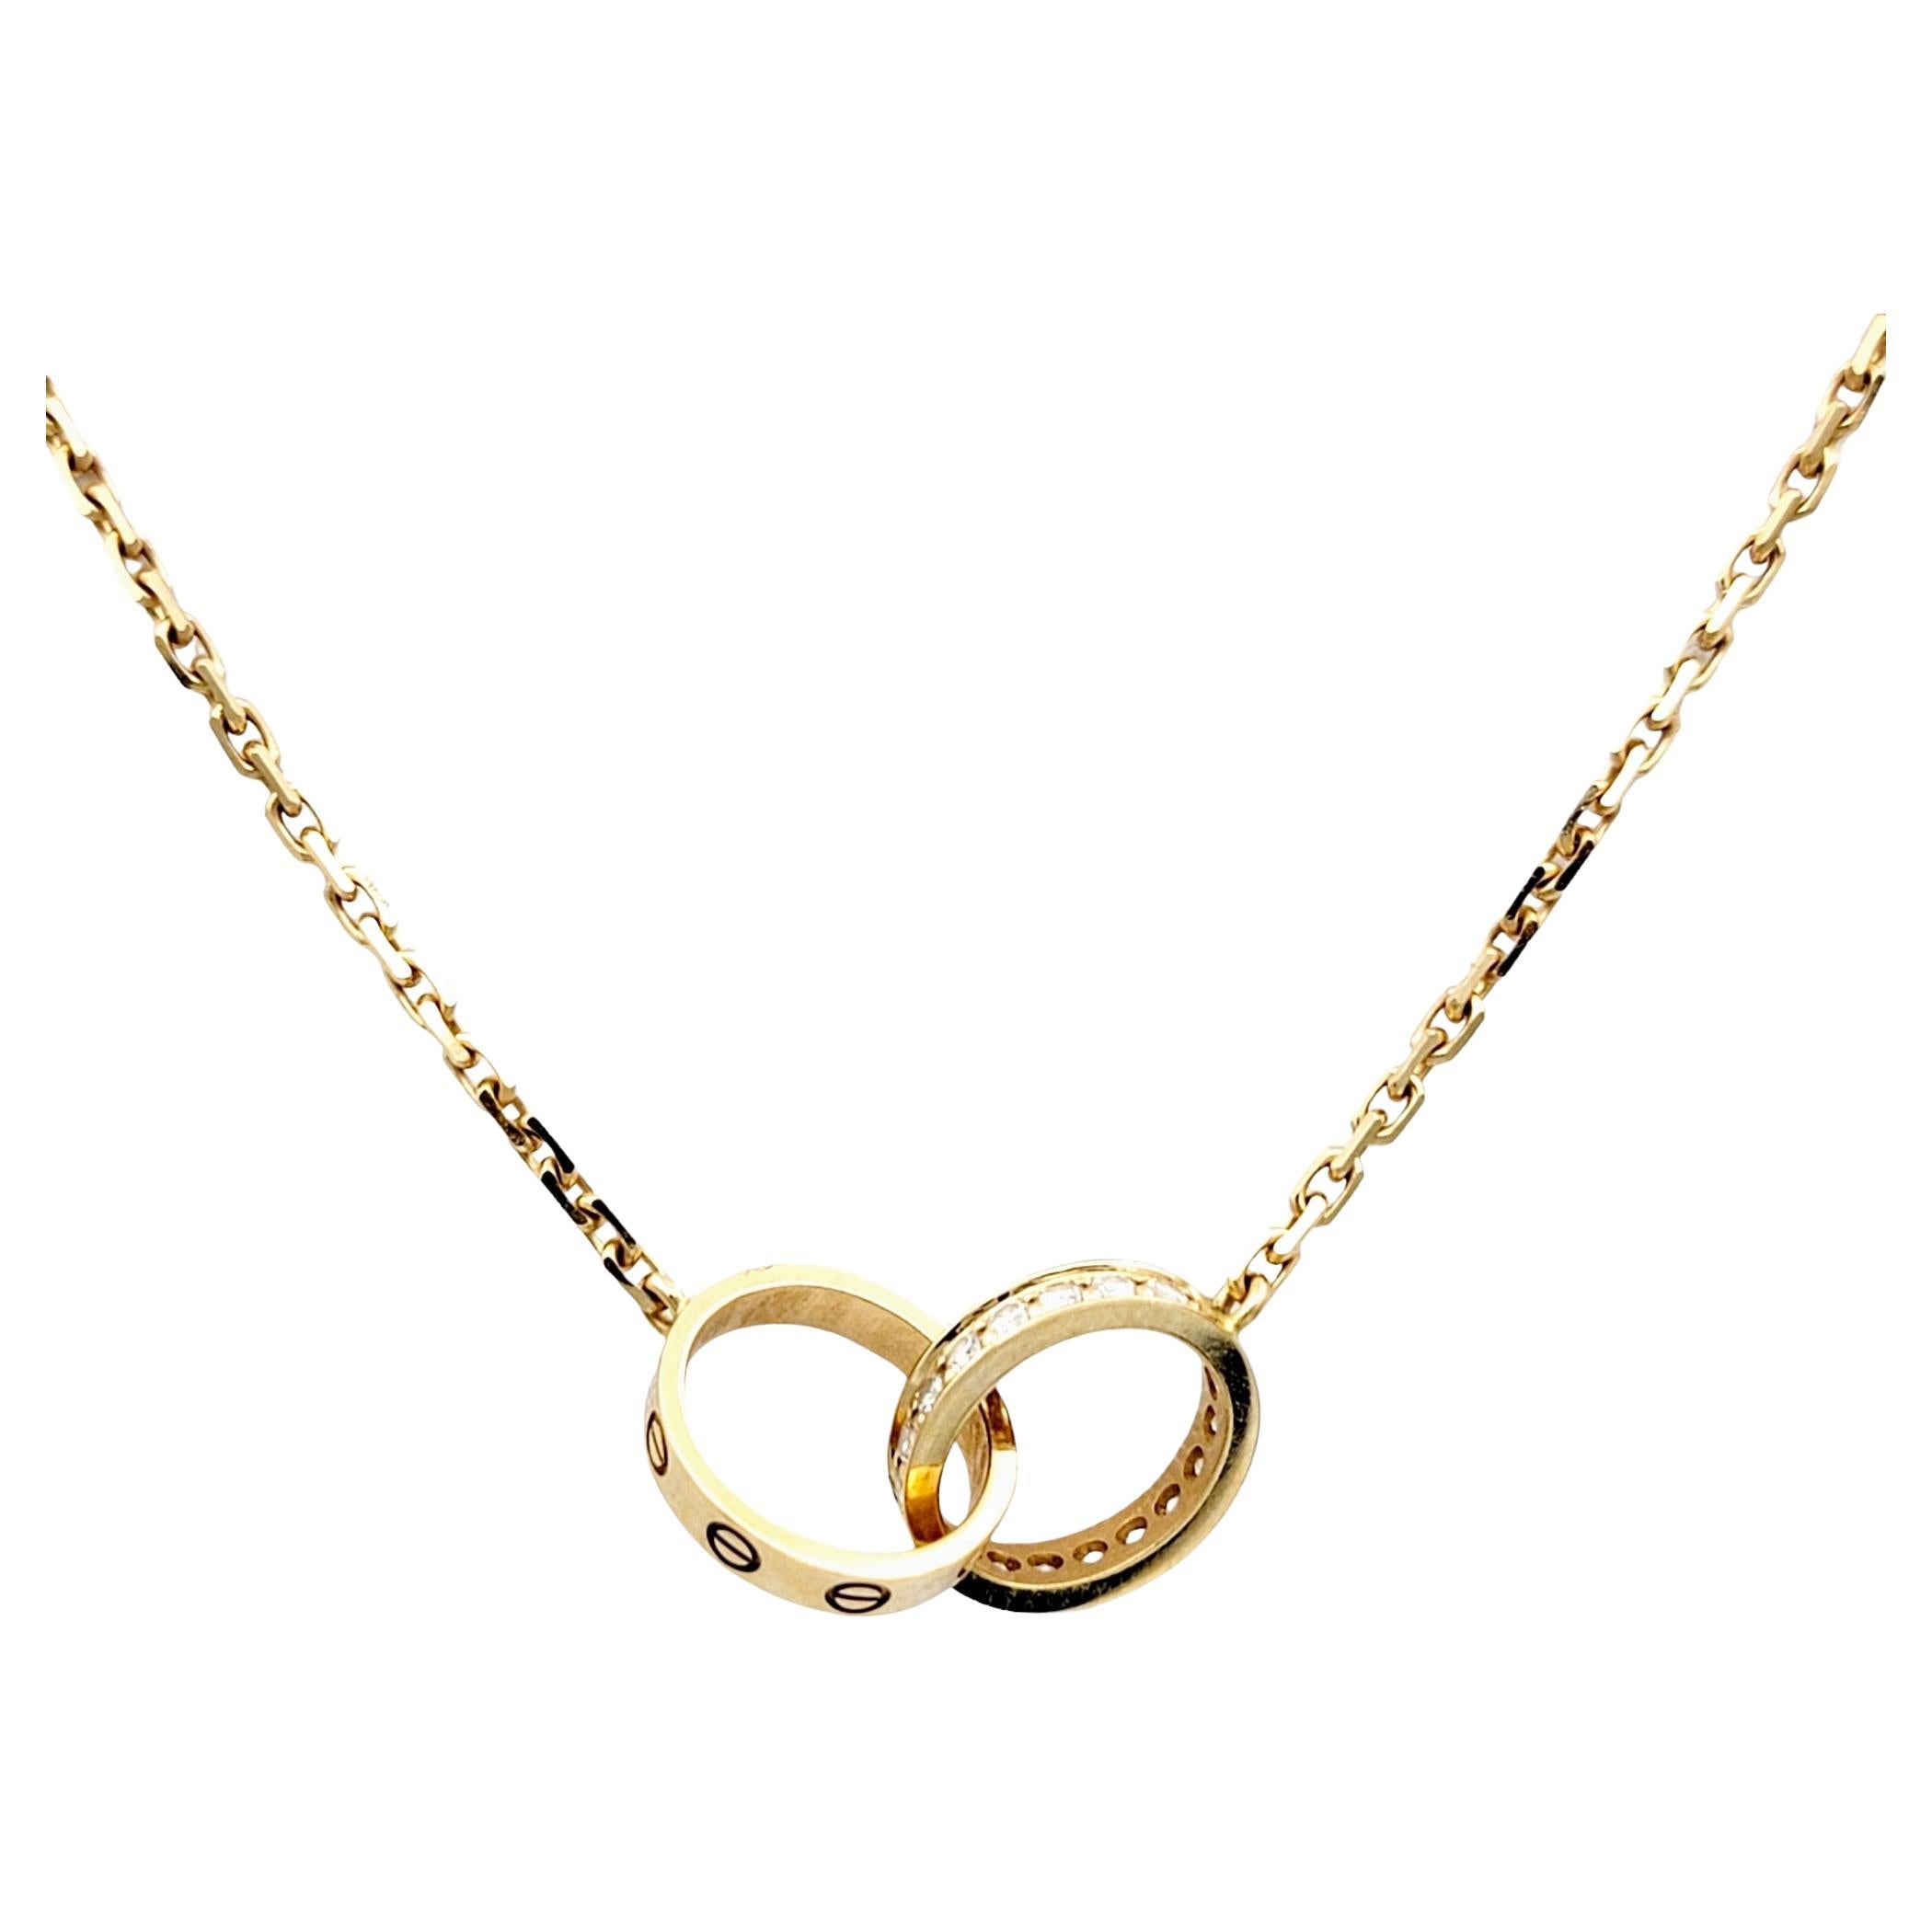 Cartier Interlocking Ring Love Necklace with Diamonds in 18 Karat Pink Gold, Box